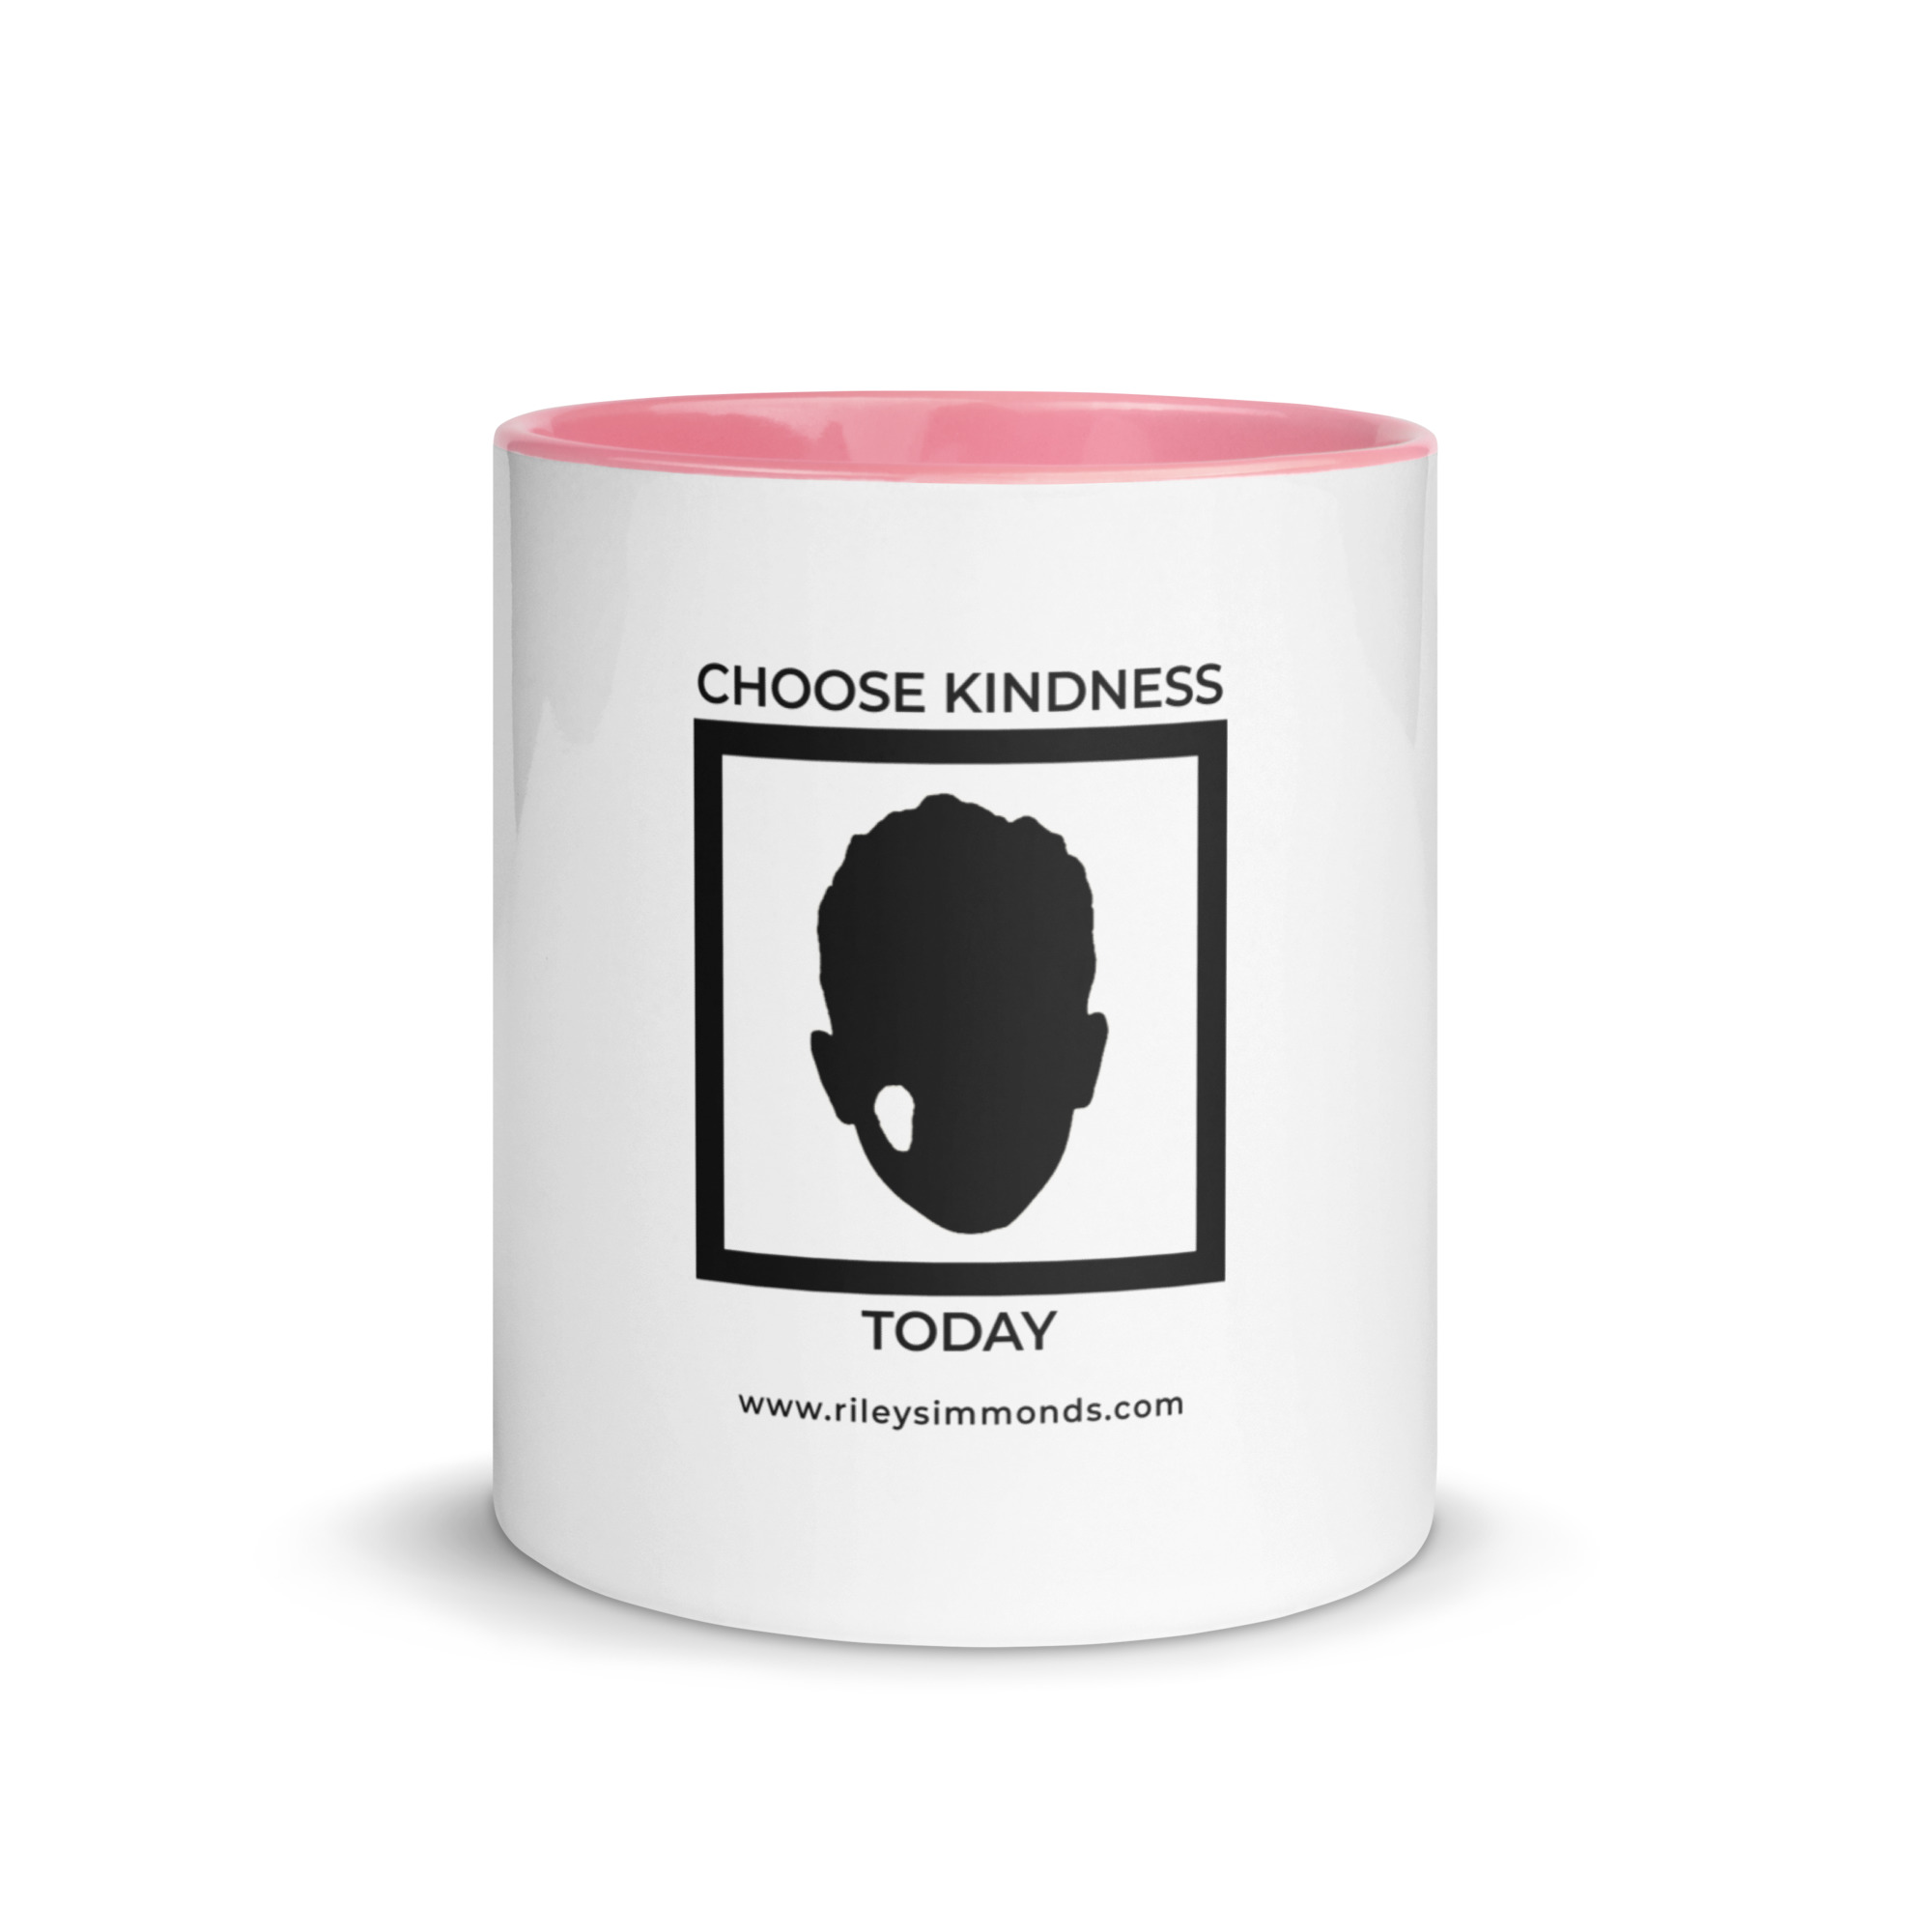 white-ceramic-mug-with-color-inside-pink-11-oz-front-6522a1a404289.jpg